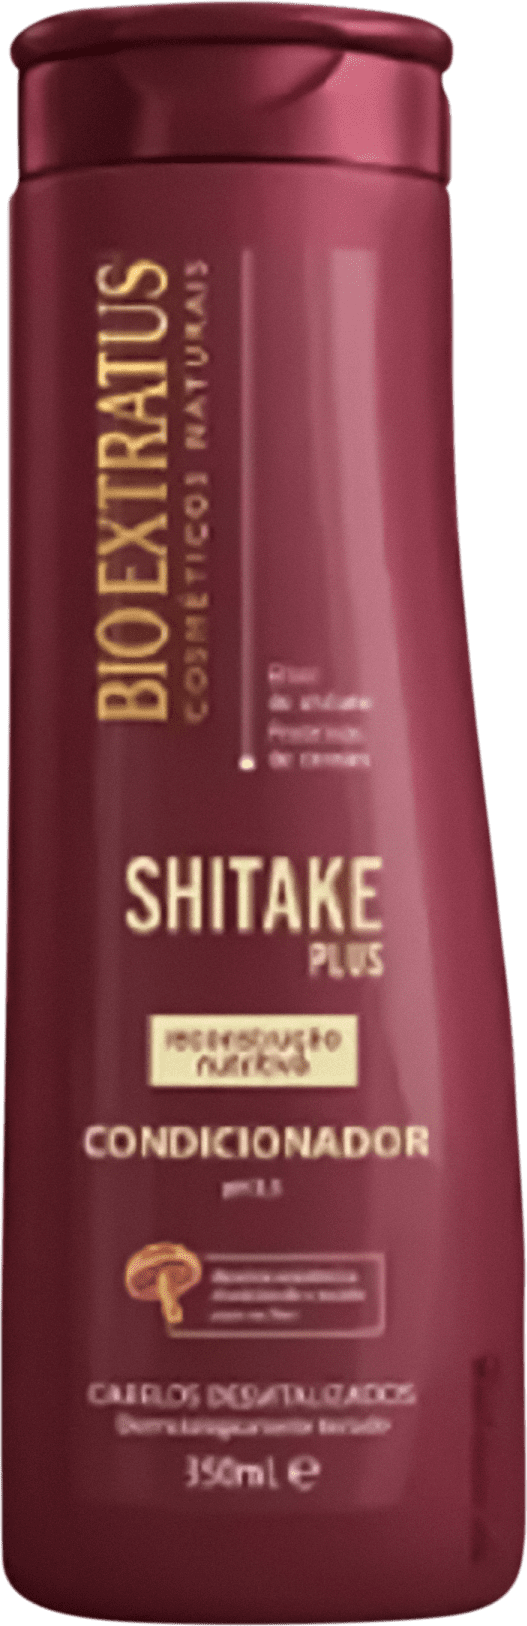 Kit Bio Extratus Shitake Plus Reconstrução Capilar 3 Produtos - Perfumaria  Lumi Store